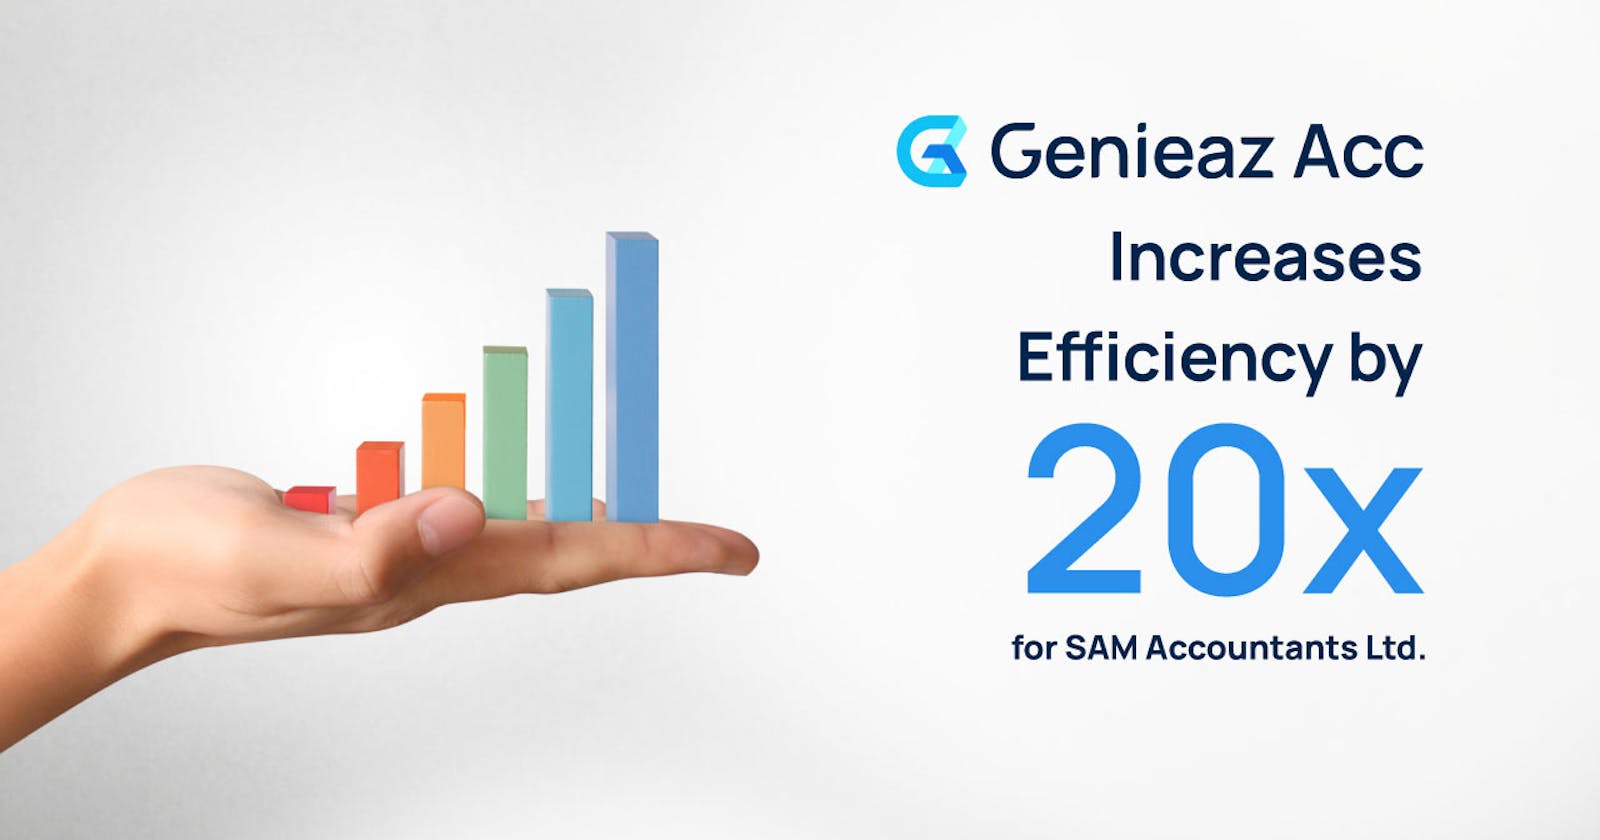 Genieaz Acc Increases Efficiency by 20x for SAM Accountants Ltd.